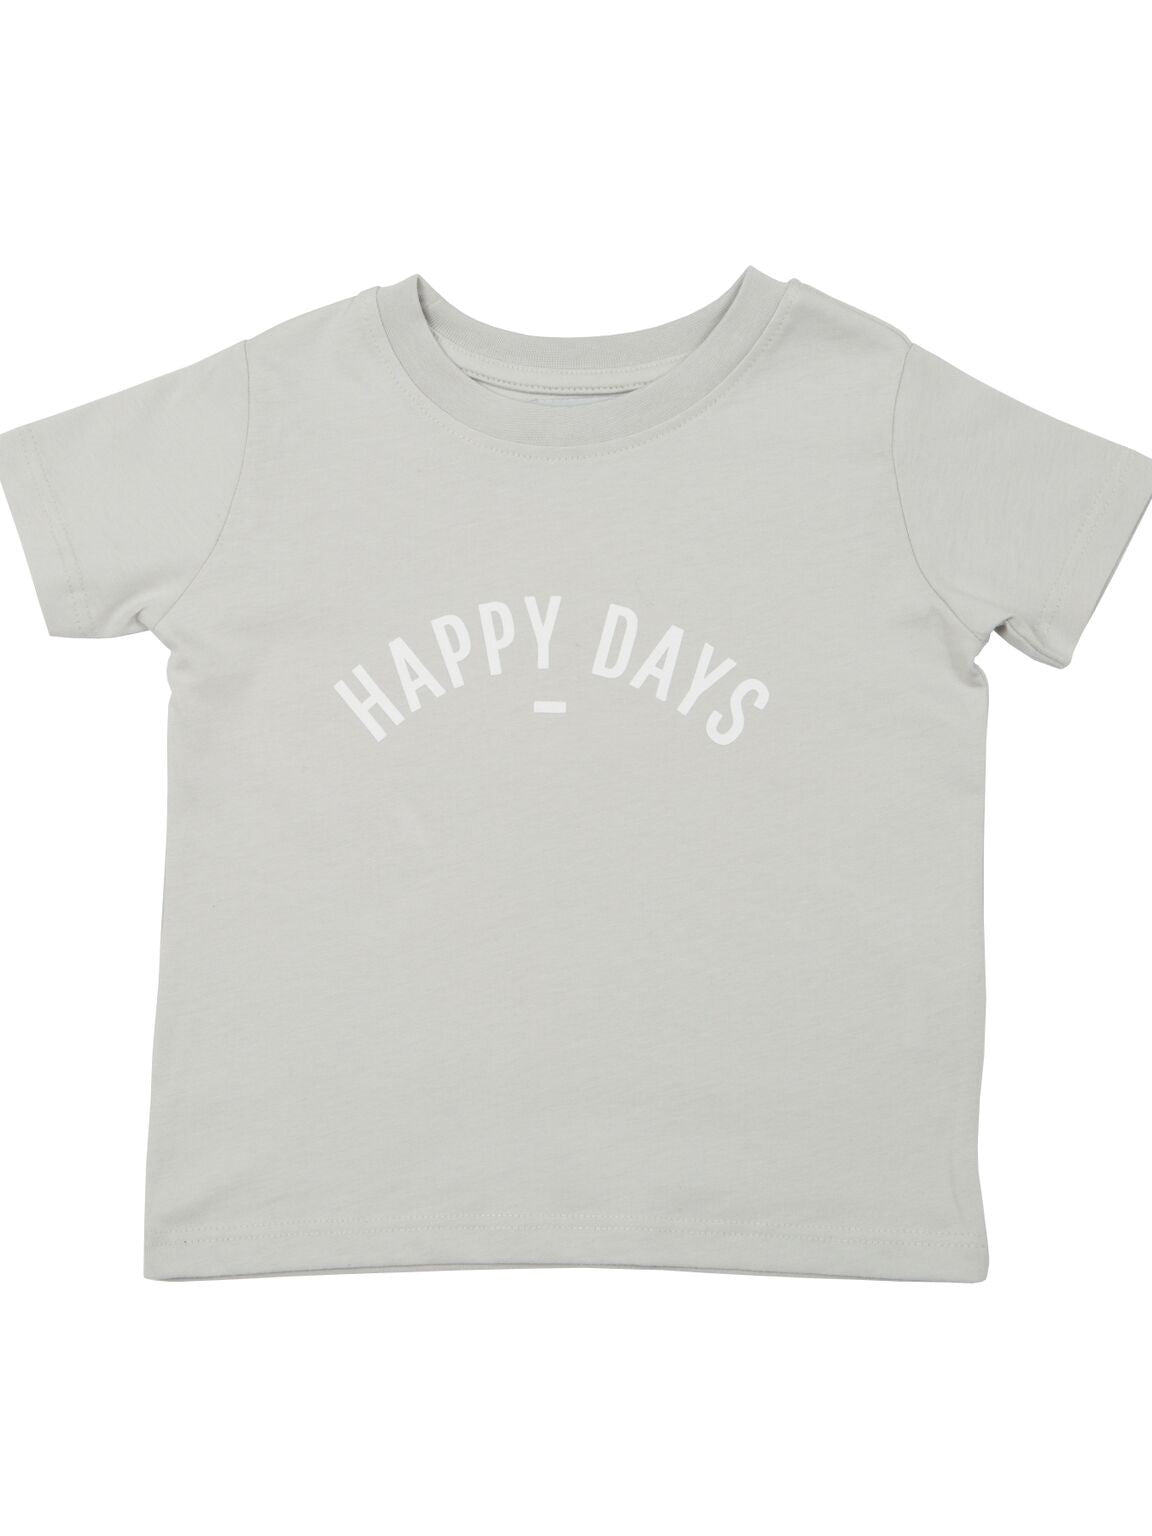 happy days grey t shirt